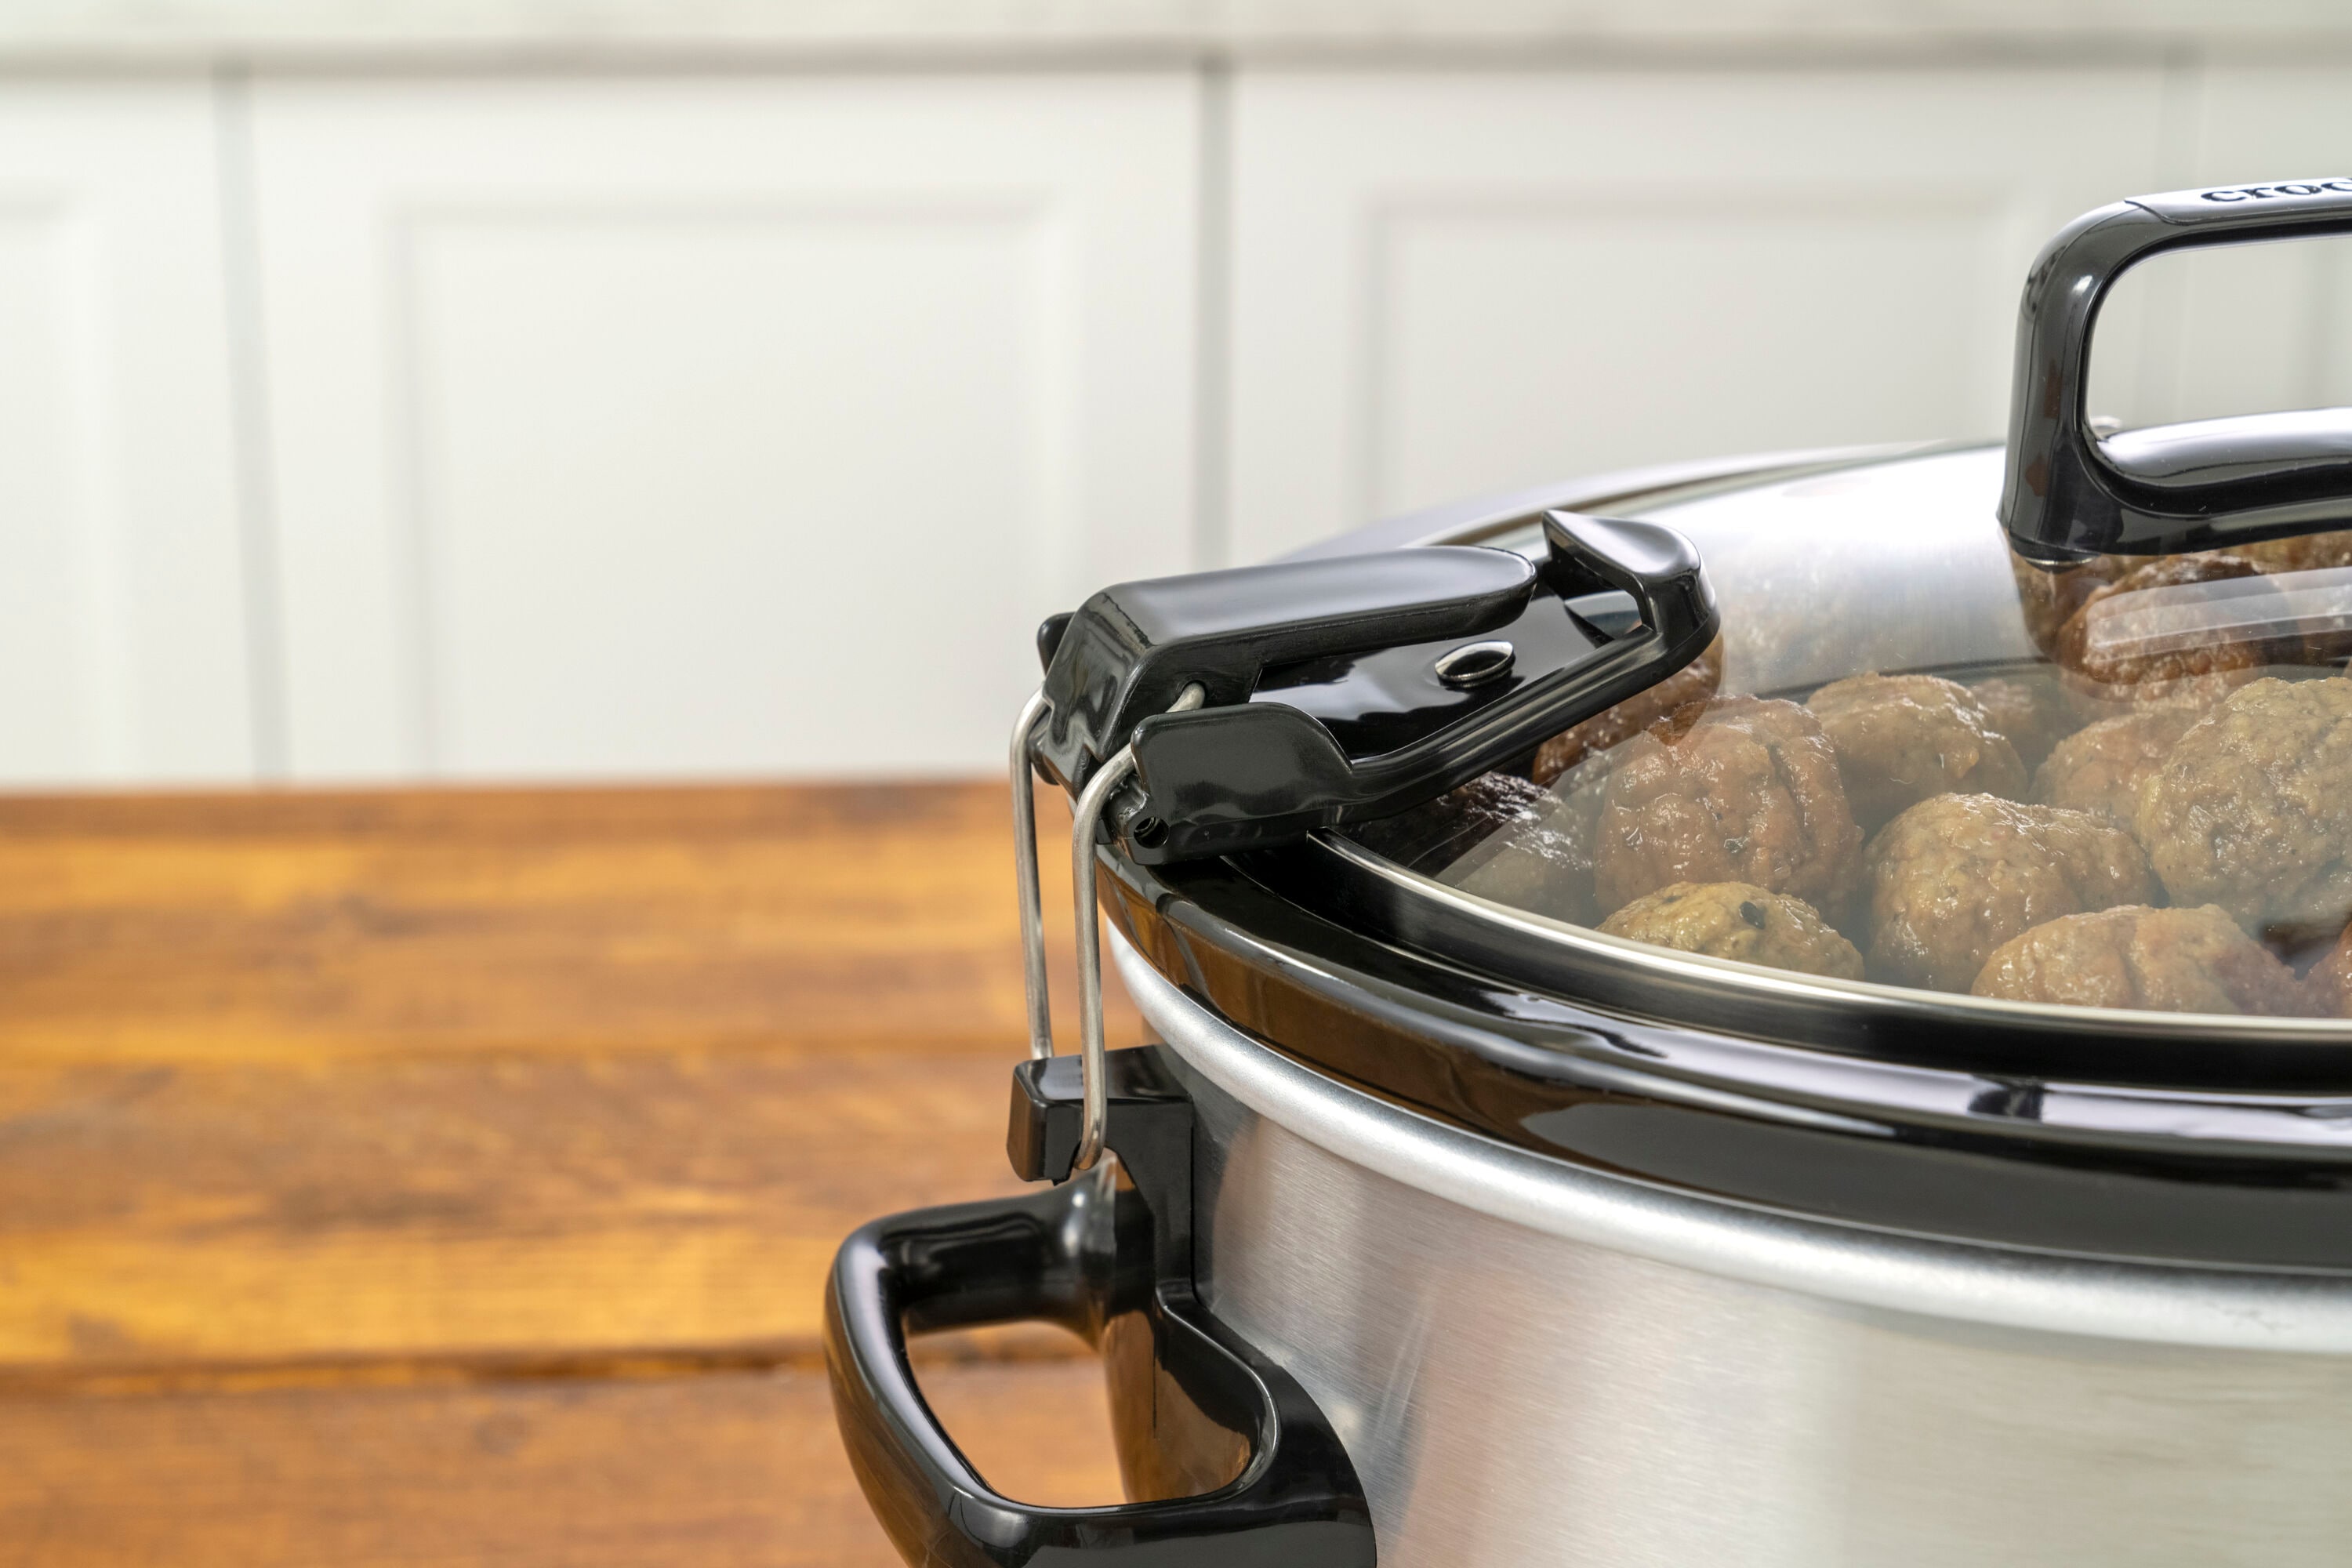  Crock-Pot 4 Quart Travel Proof Cook and Carry